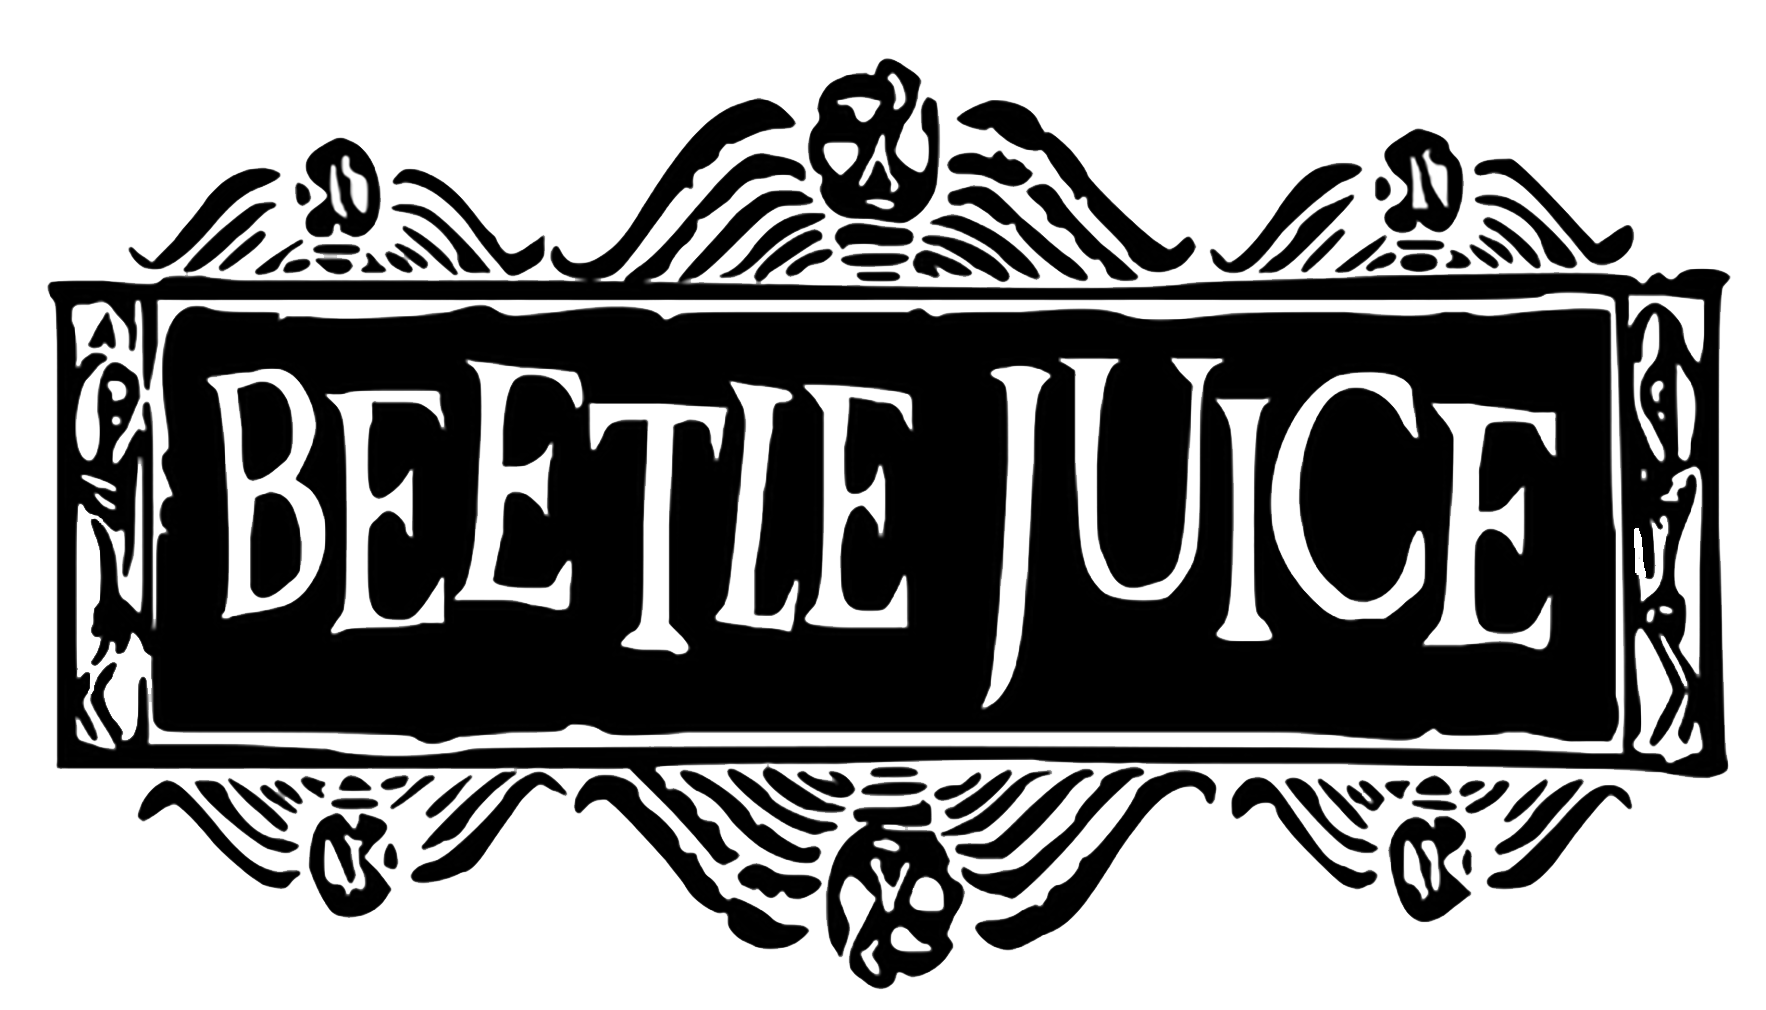 Beetlejuice logotipo PNG imagem fundo